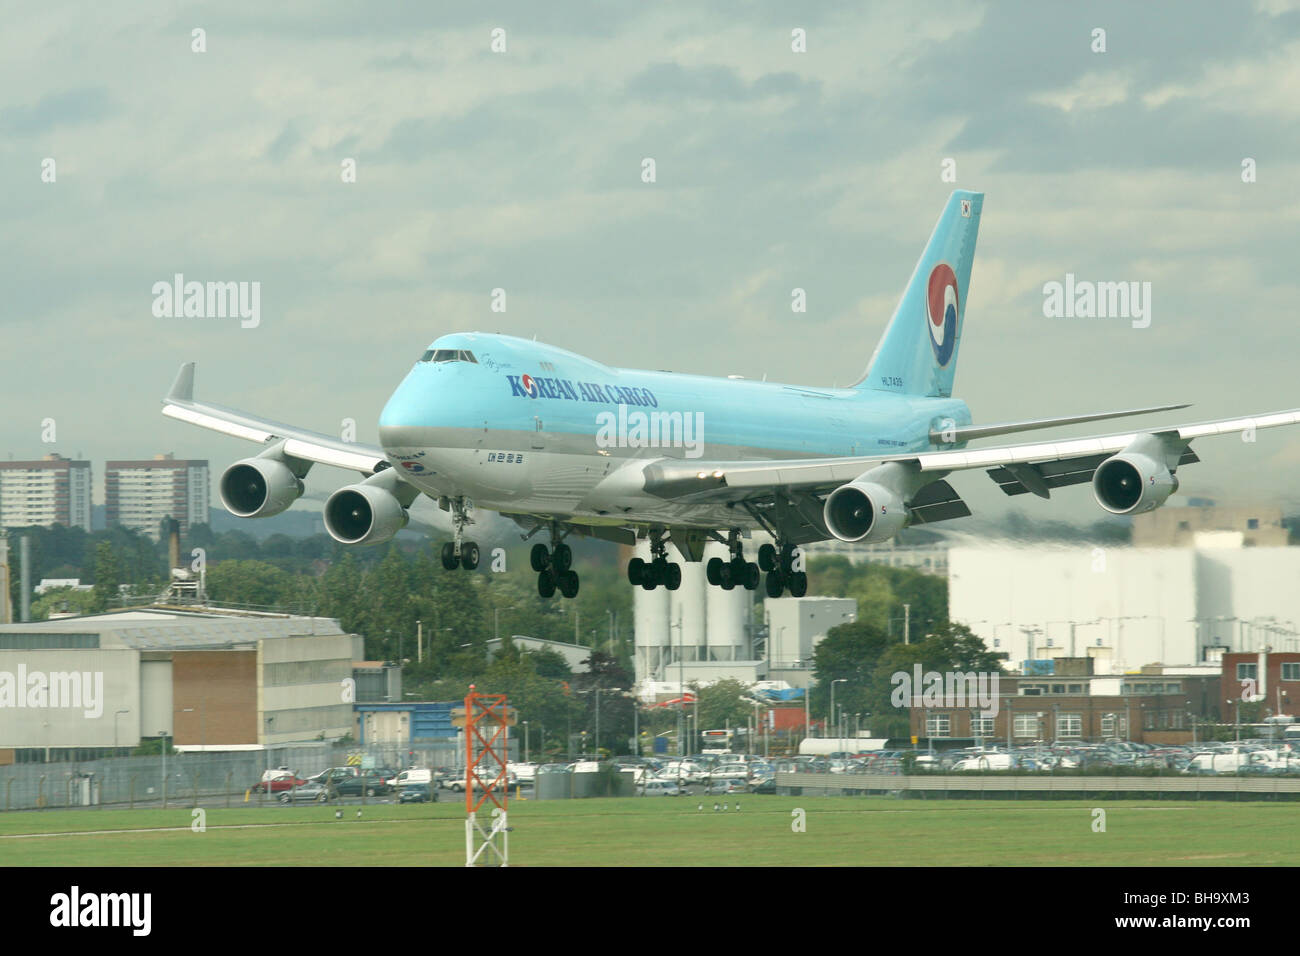 Korean Air Cargo 747, jumbo jet, atterrando all'aeroporto di Heathrow. Foto Stock